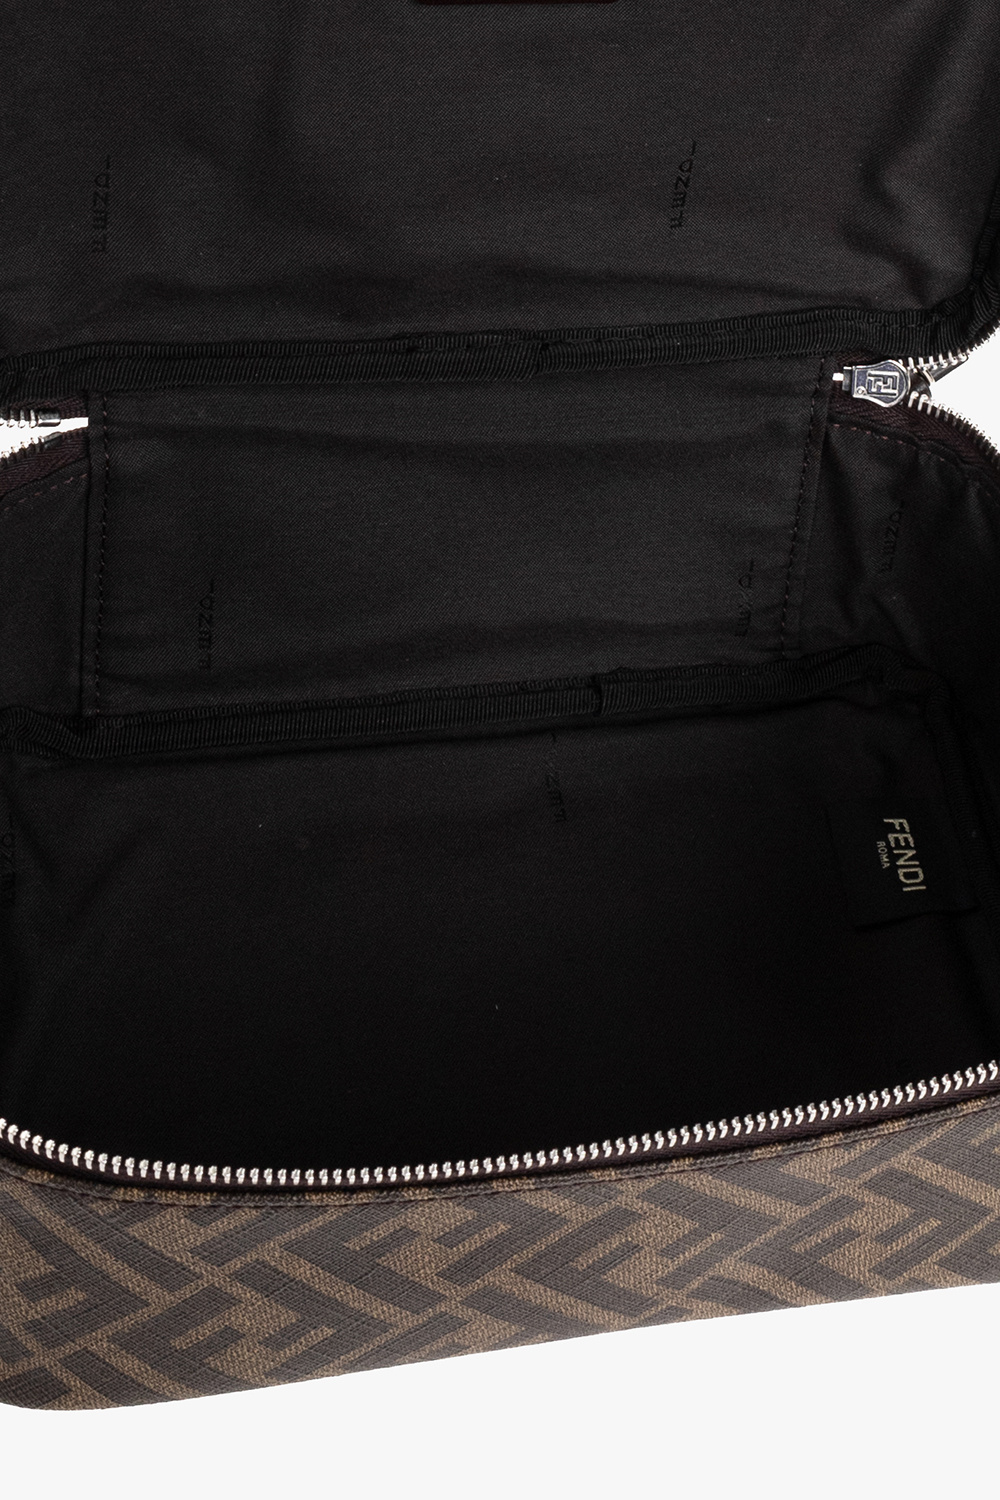 Fendi Fendi Way Large handbag